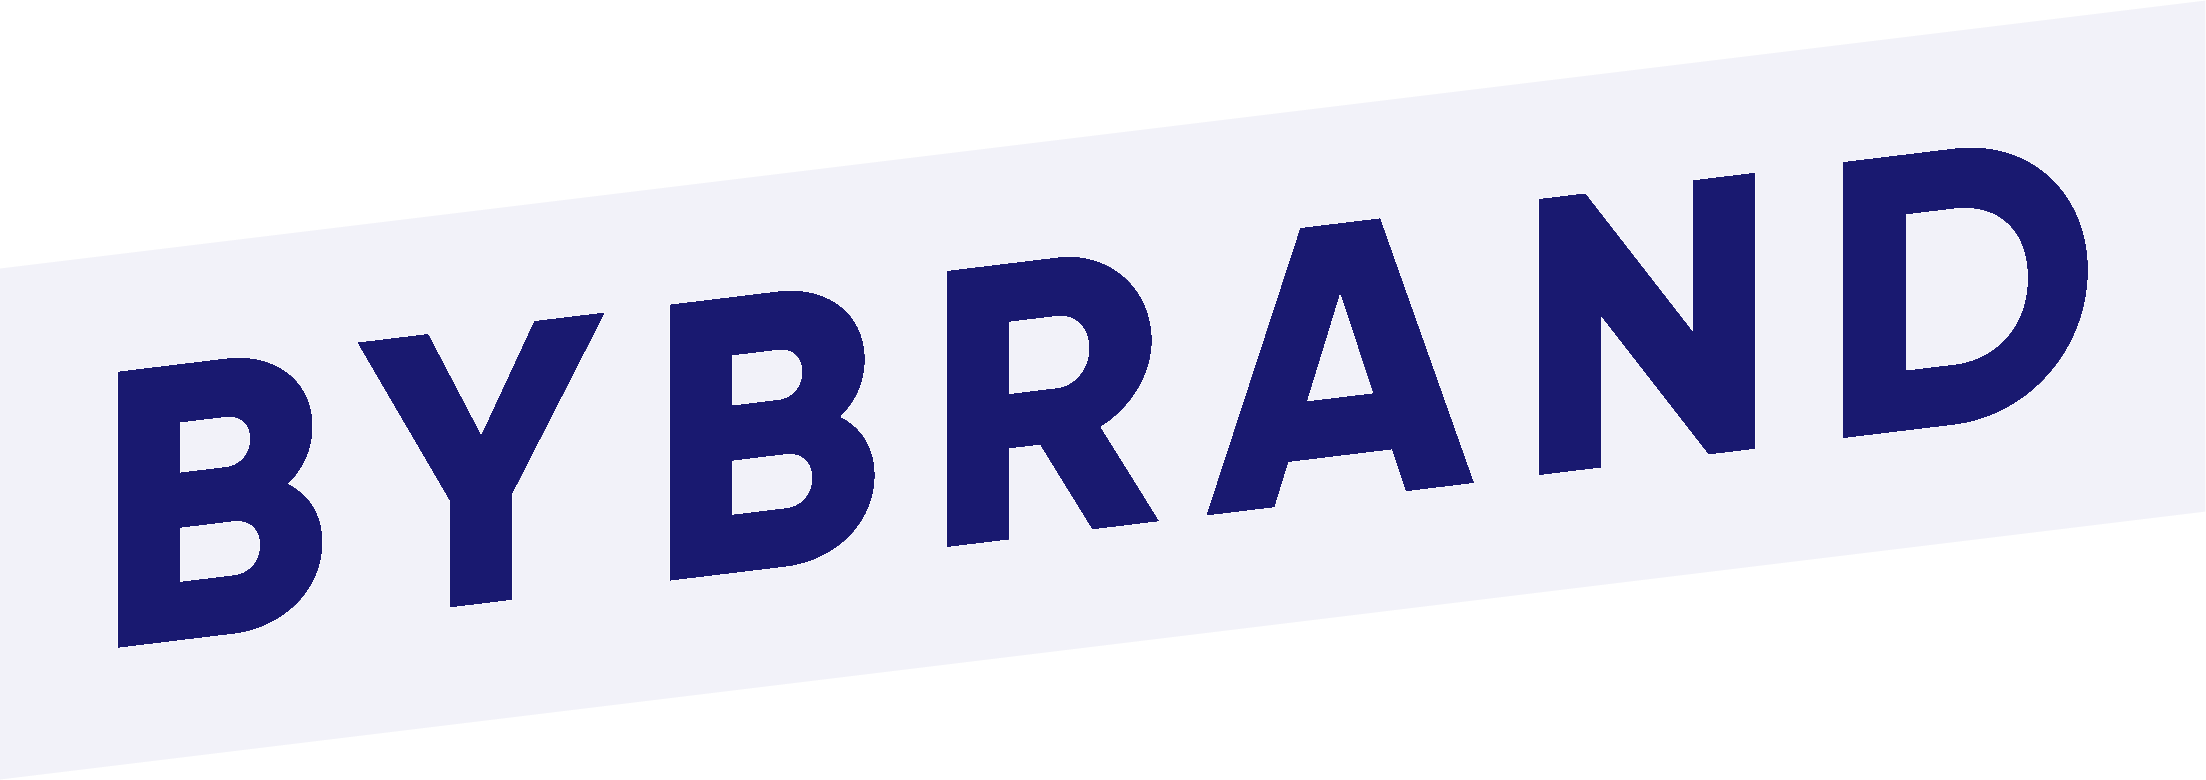 Bybrand transparent logo